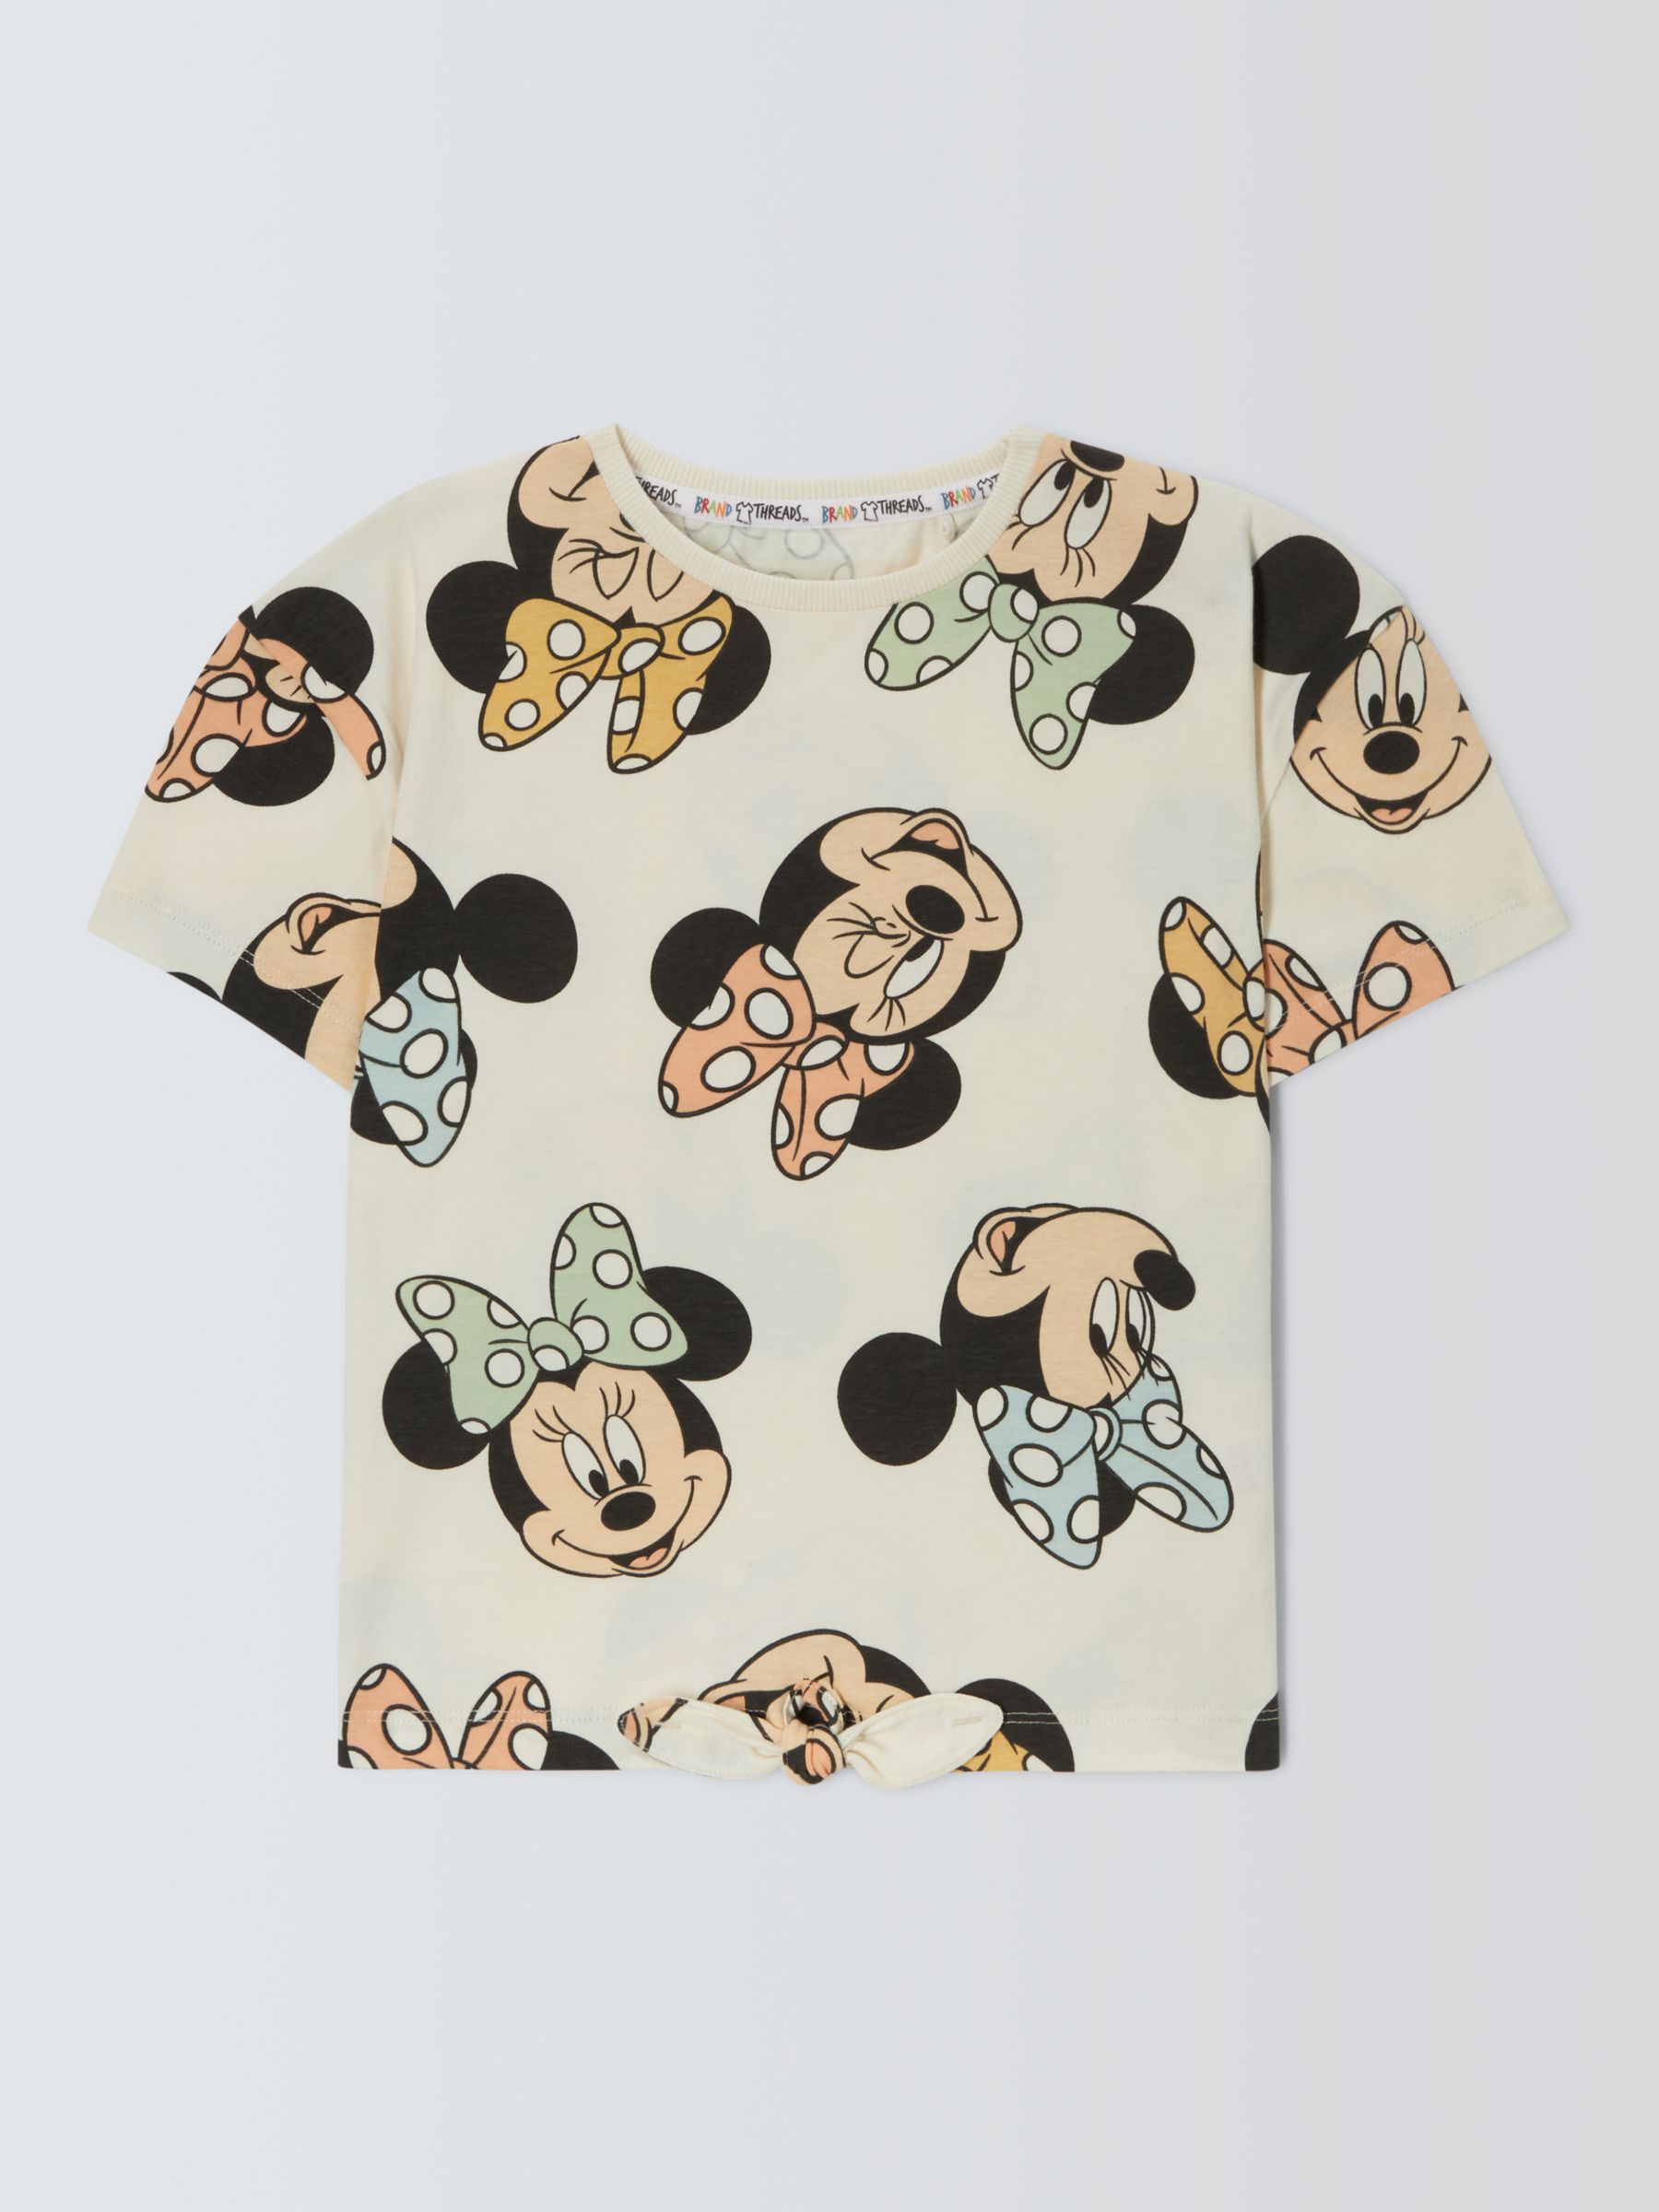 Brand Threads Kids' Disney Minnie Mouse T-Shirt, Pink, 8-9 years